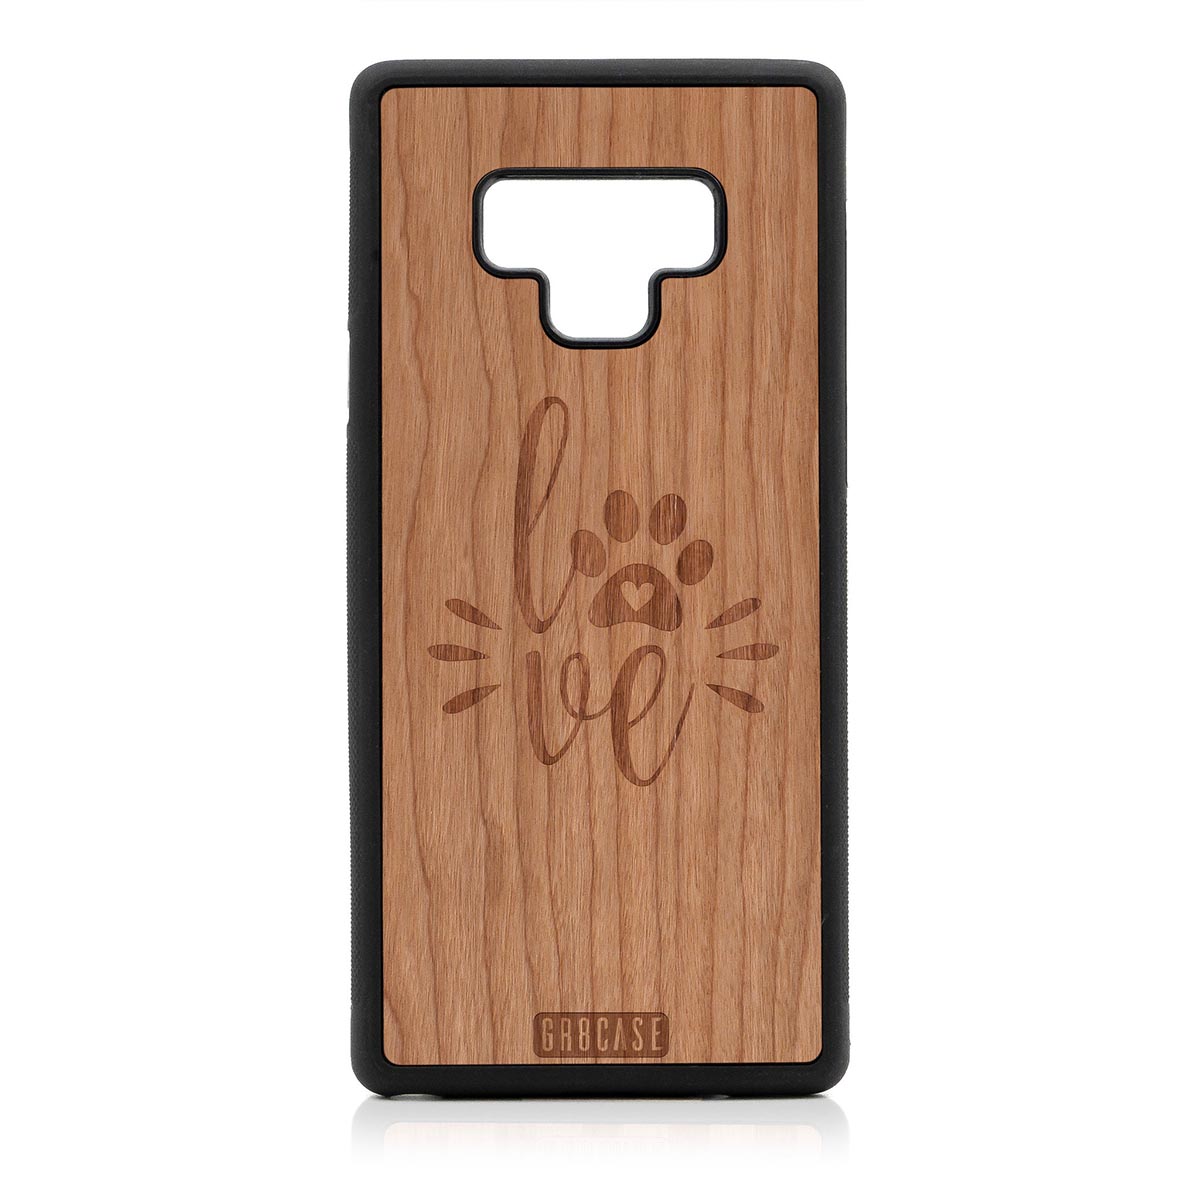 Paw Love Design Wood Case Samsung Galaxy Note 9 by GR8CASE